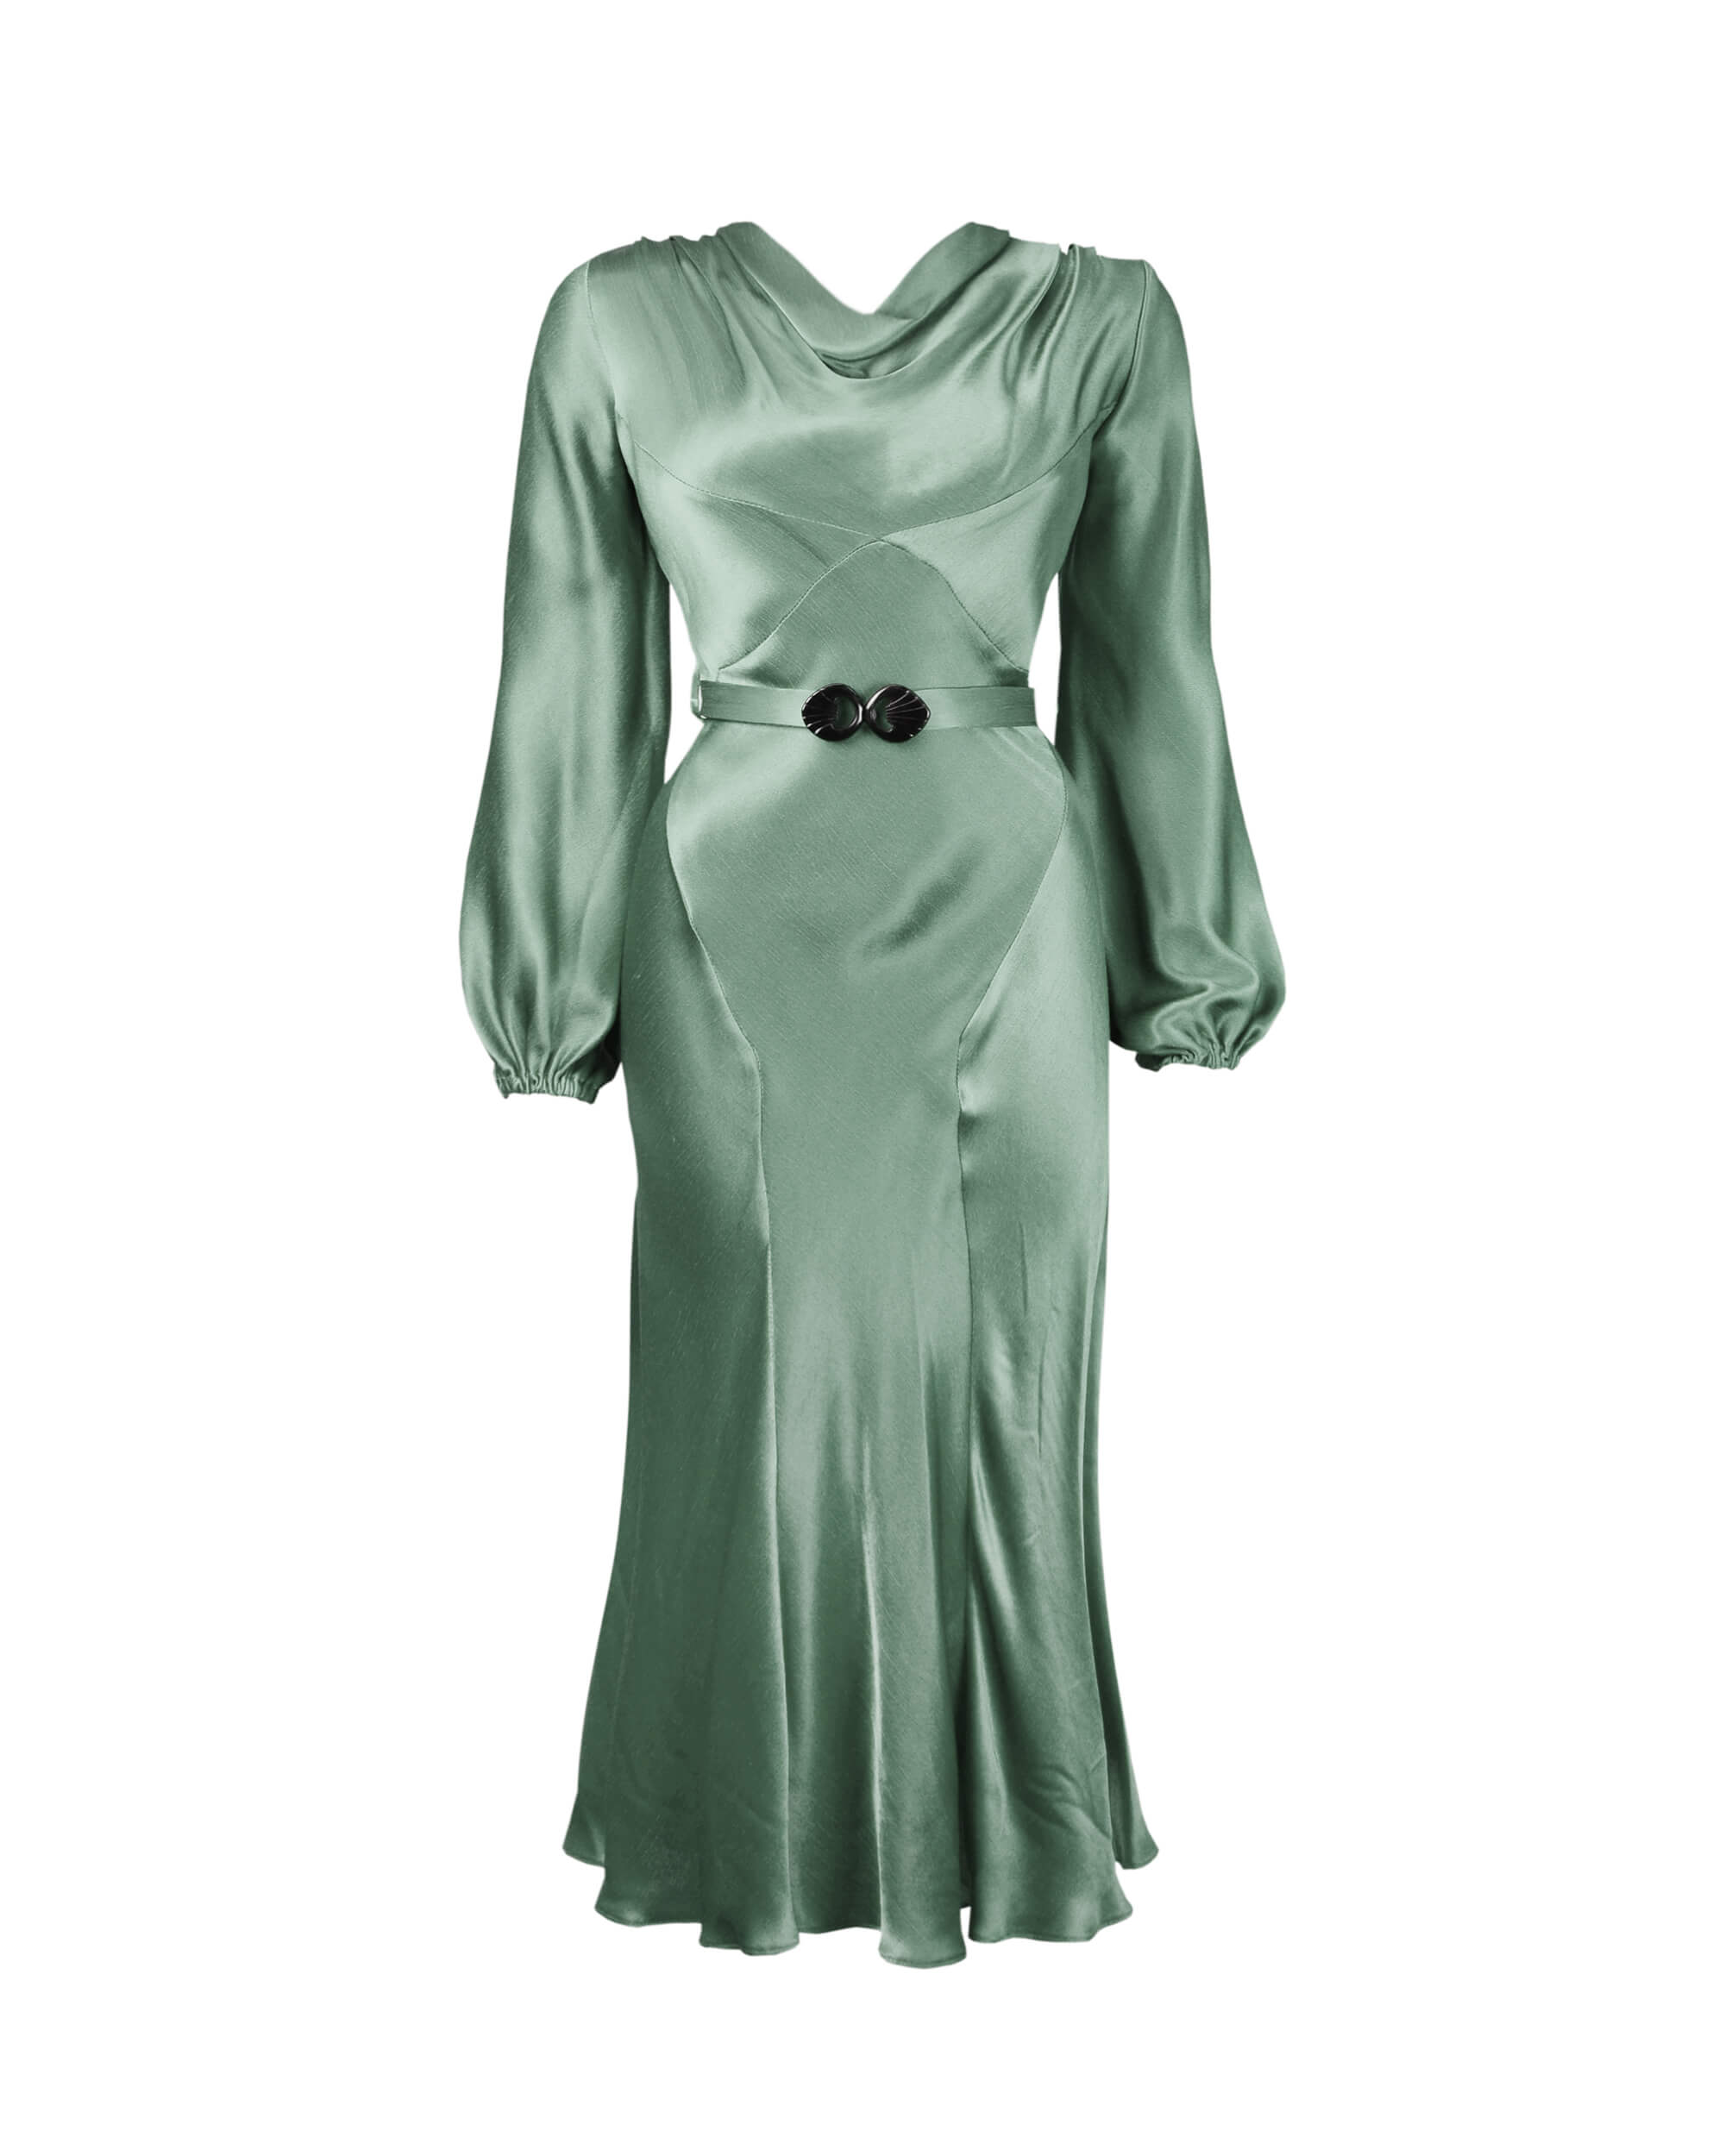 Emerald Green Satin Flowy Formal Dress - Marisela Veludo - Fashion Designer